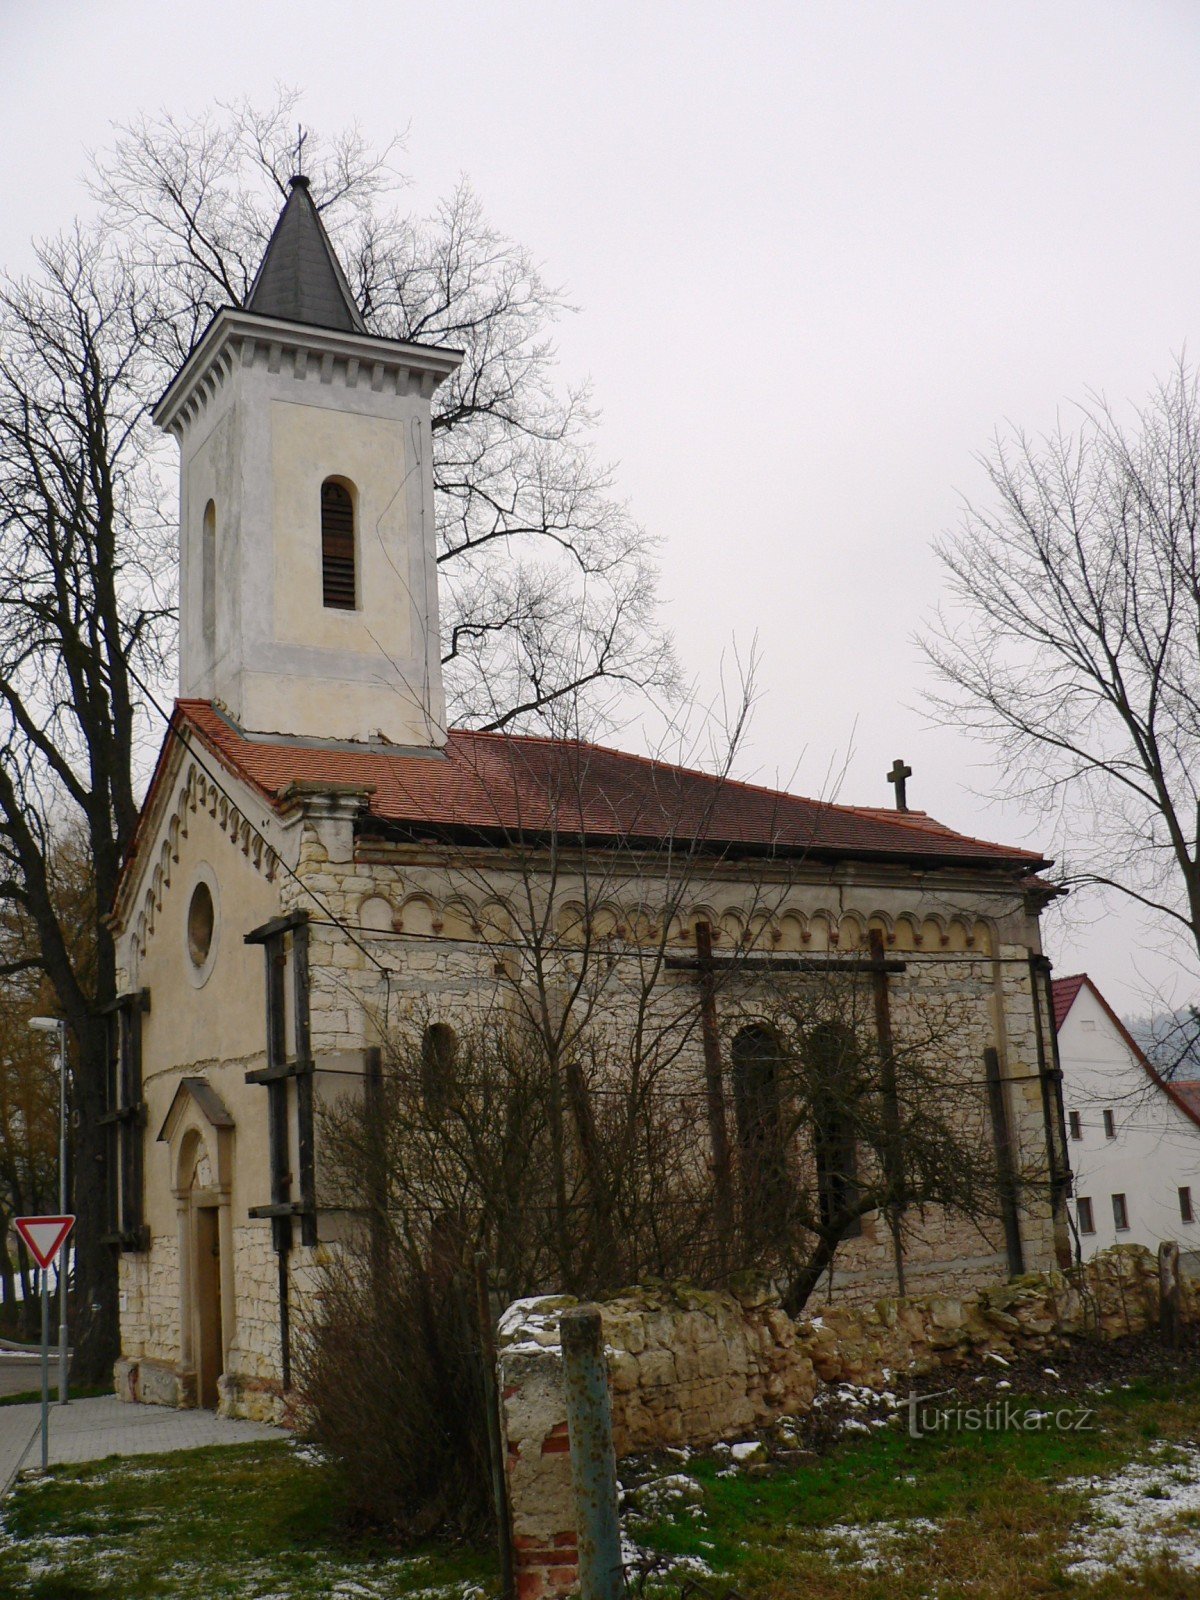 Mutějovice - church of St. Procopius